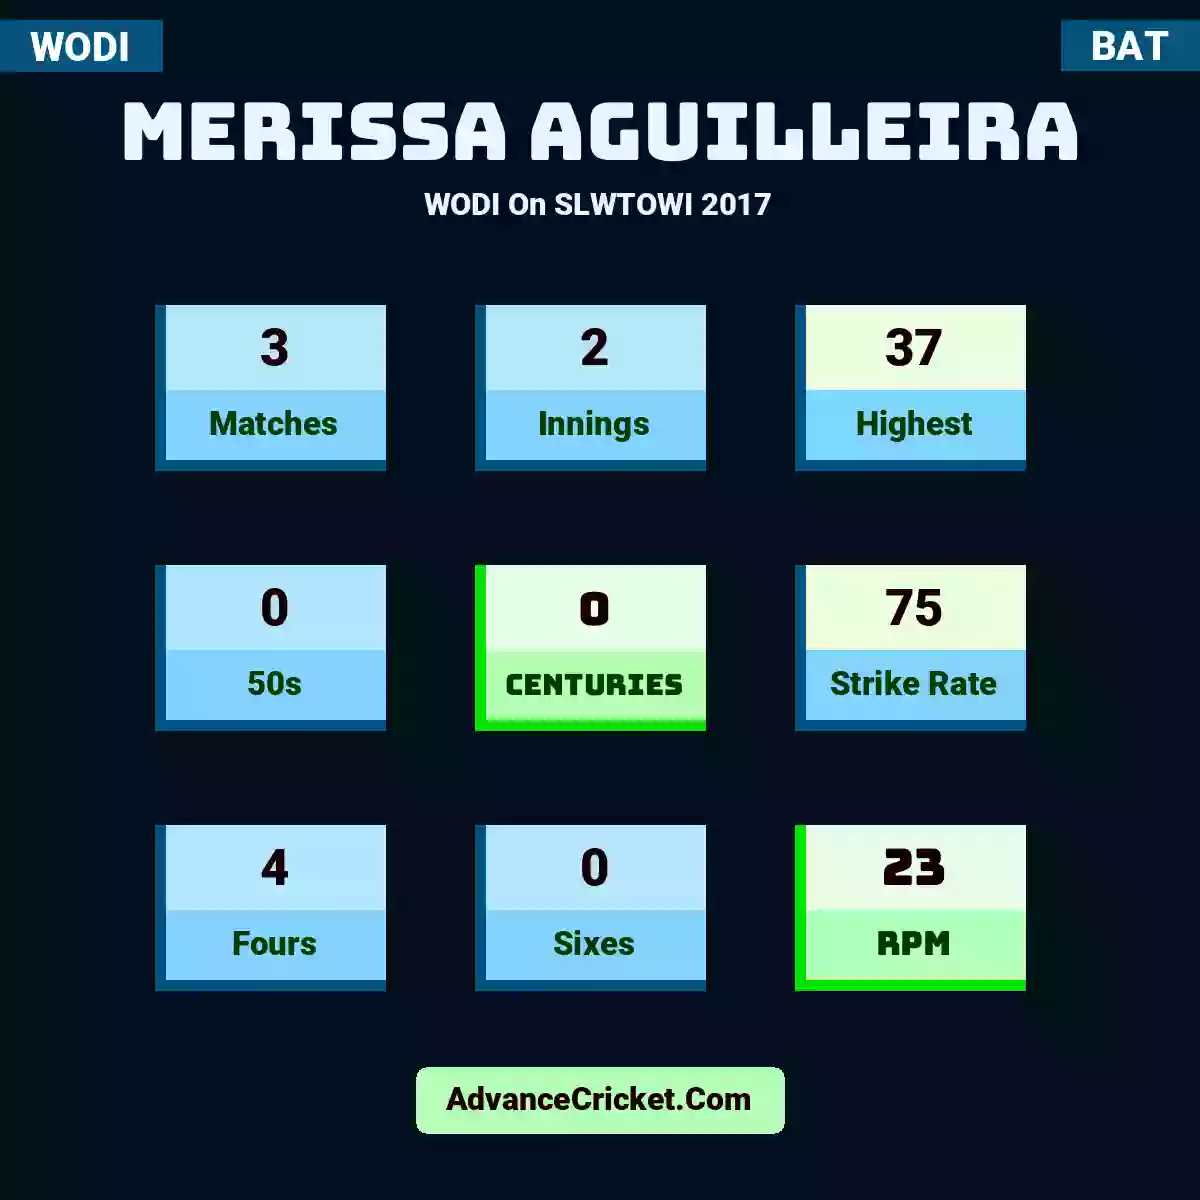 Merissa Aguilleira WODI  On SLWTOWI 2017, Merissa Aguilleira played 3 matches, scored 37 runs as highest, 0 half-centuries, and 0 centuries, with a strike rate of 75. M.Aguilleira hit 4 fours and 0 sixes, with an RPM of 23.